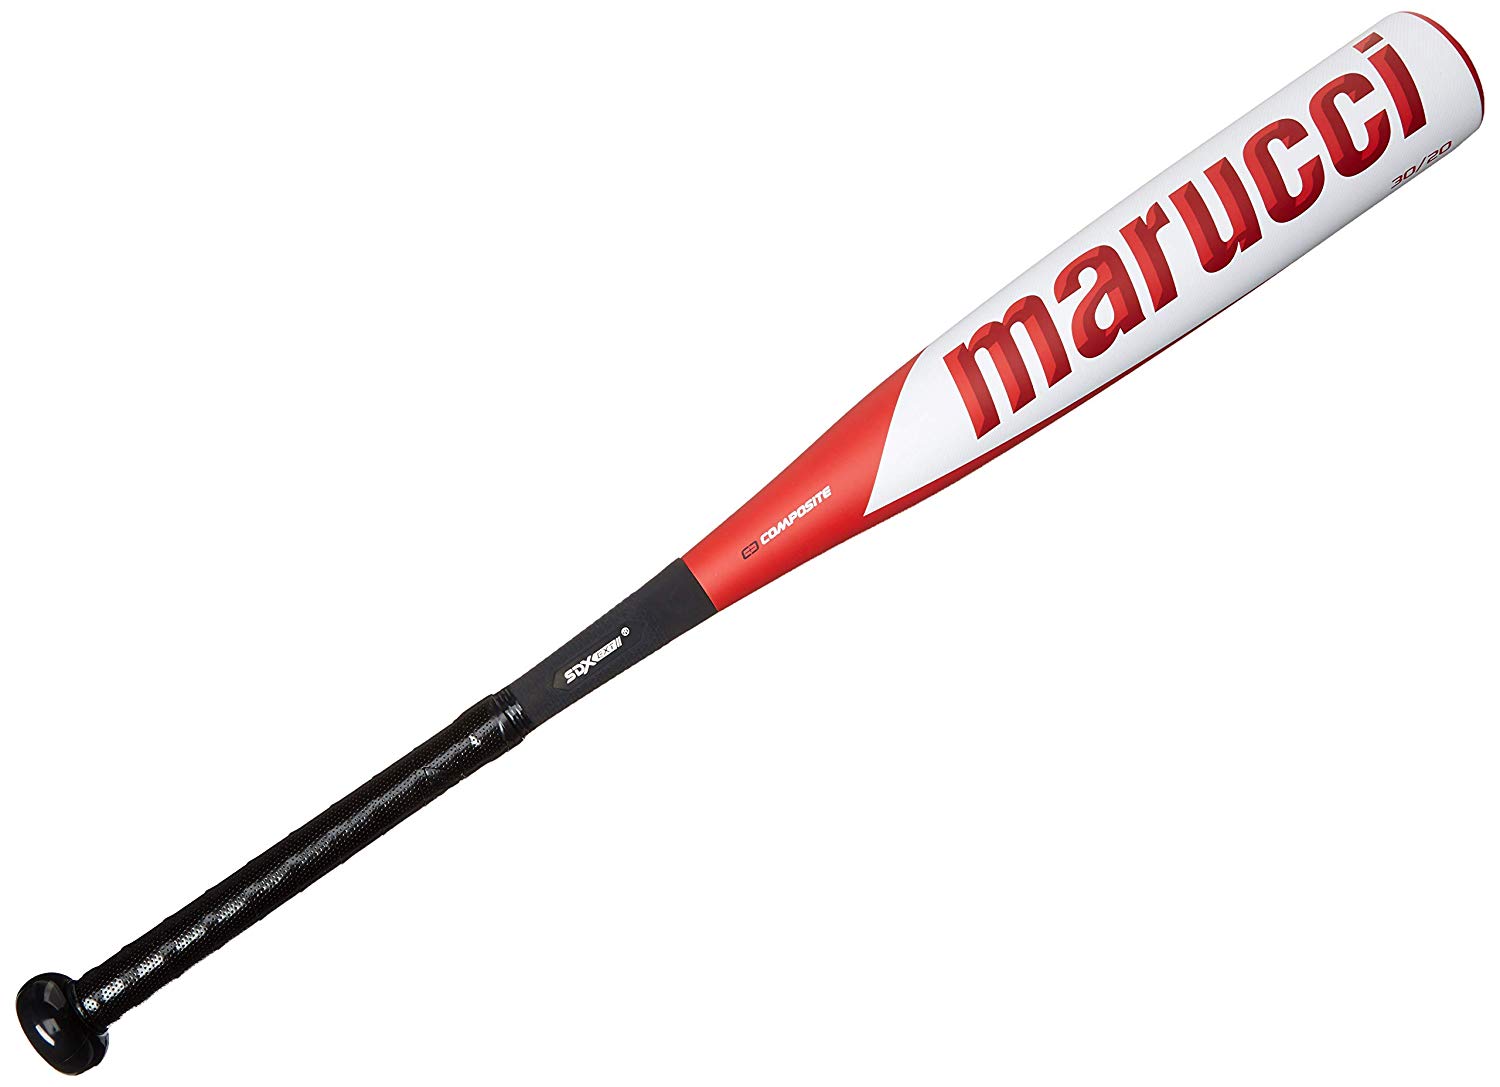 marucci-cat-composite-senior-league-baseball-bat-10-msbccp10-28-inch-18-oz MSBCCP10-2818 Marucci 849817068113 The CAT Composite -10 is a USSSA certified two-piece composite bat